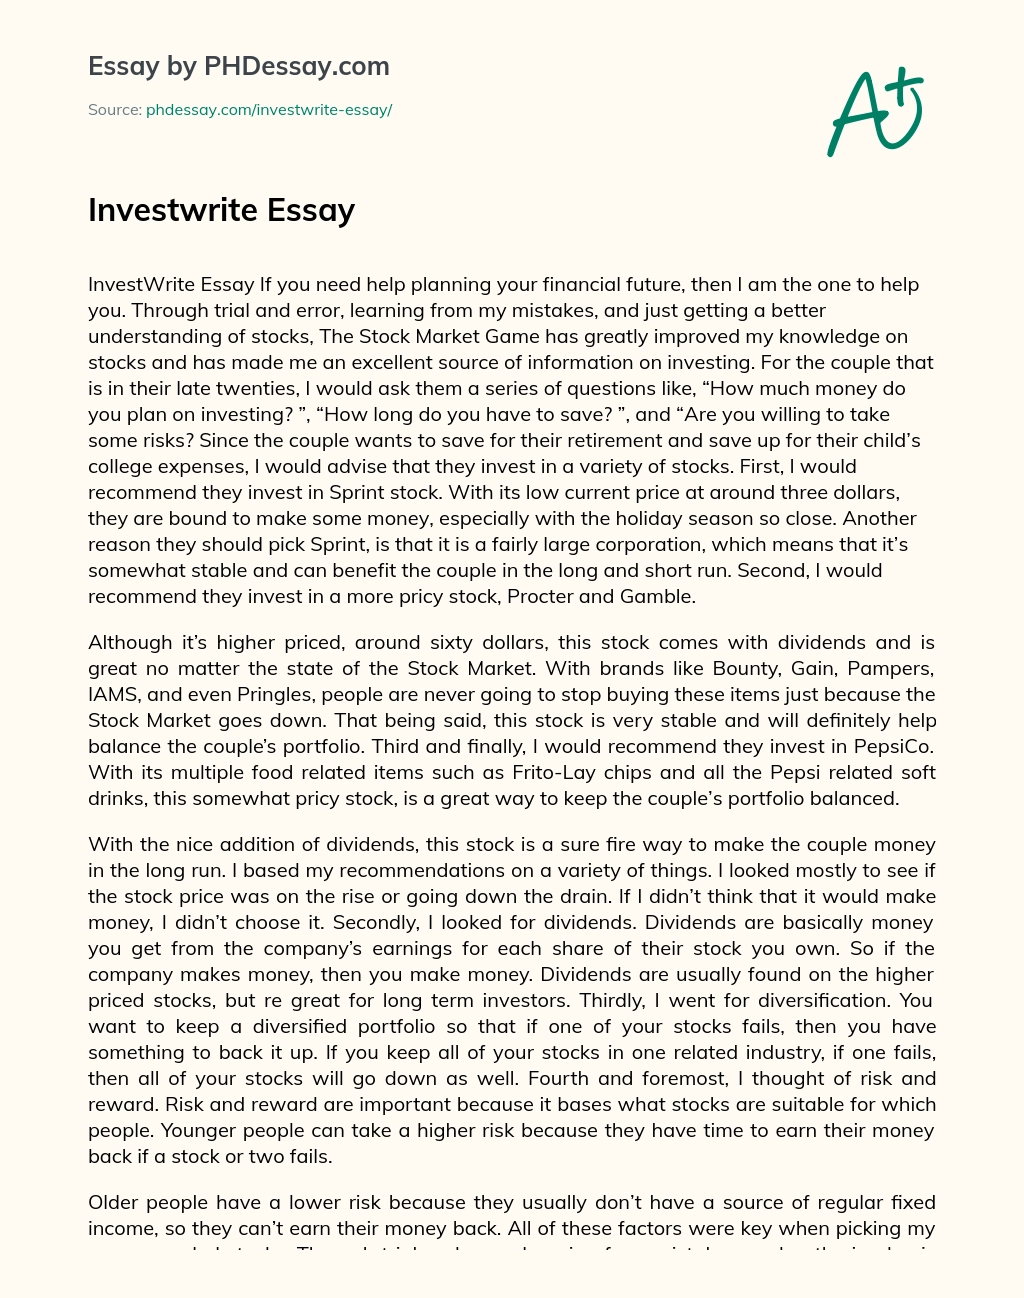 Investwrite Essay essay